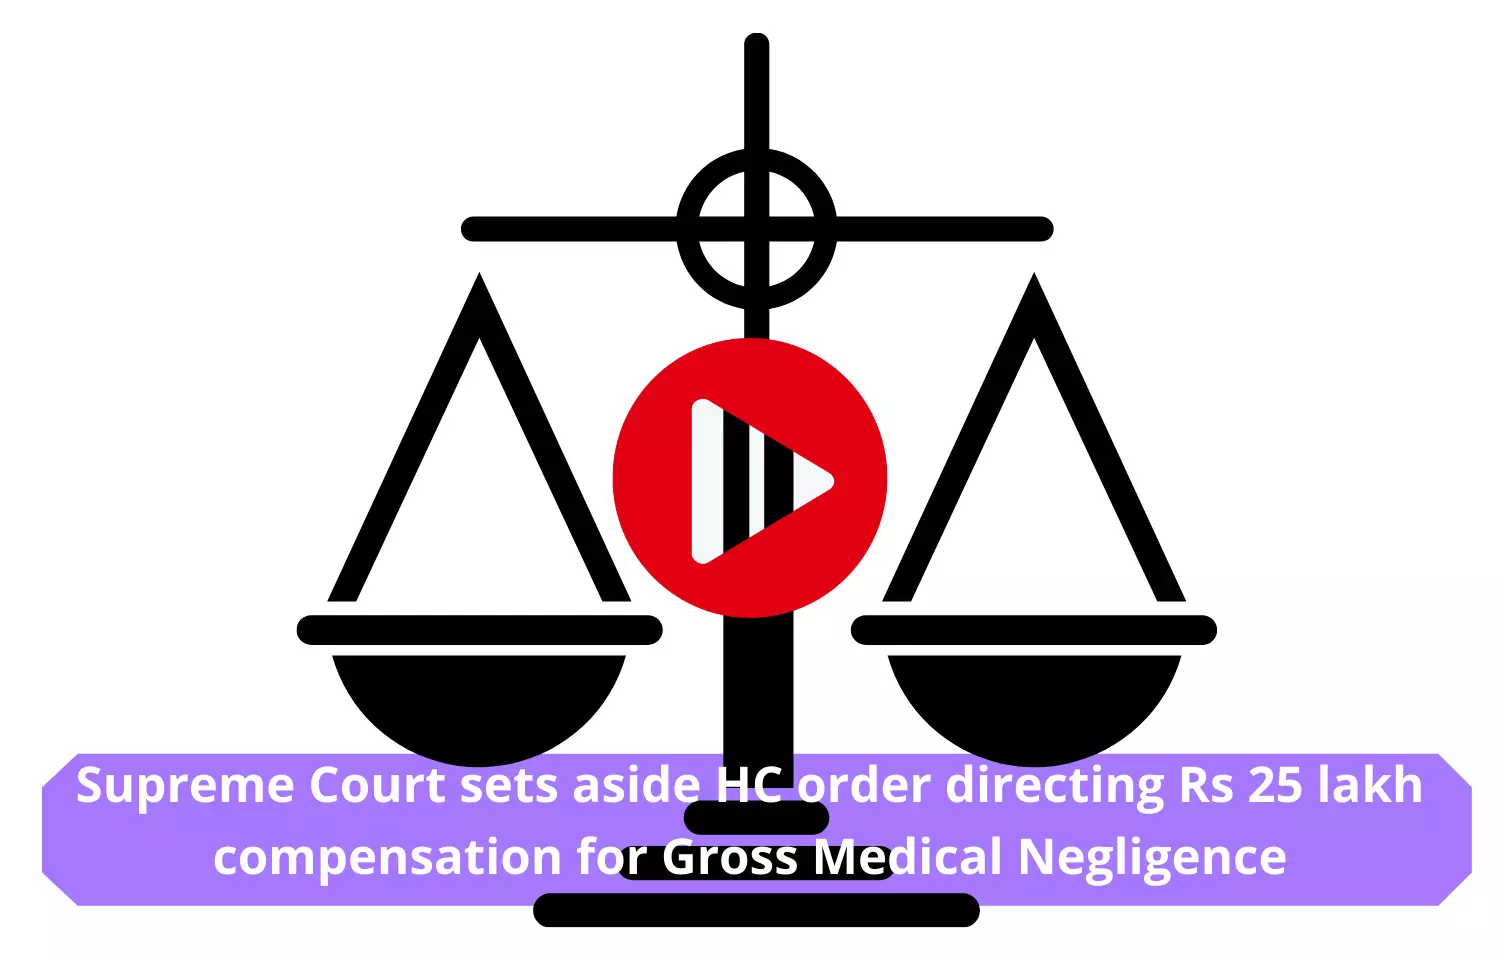 SC sets aside Allahabad HC order directing Rs 25 lakh compensation for medical negligence